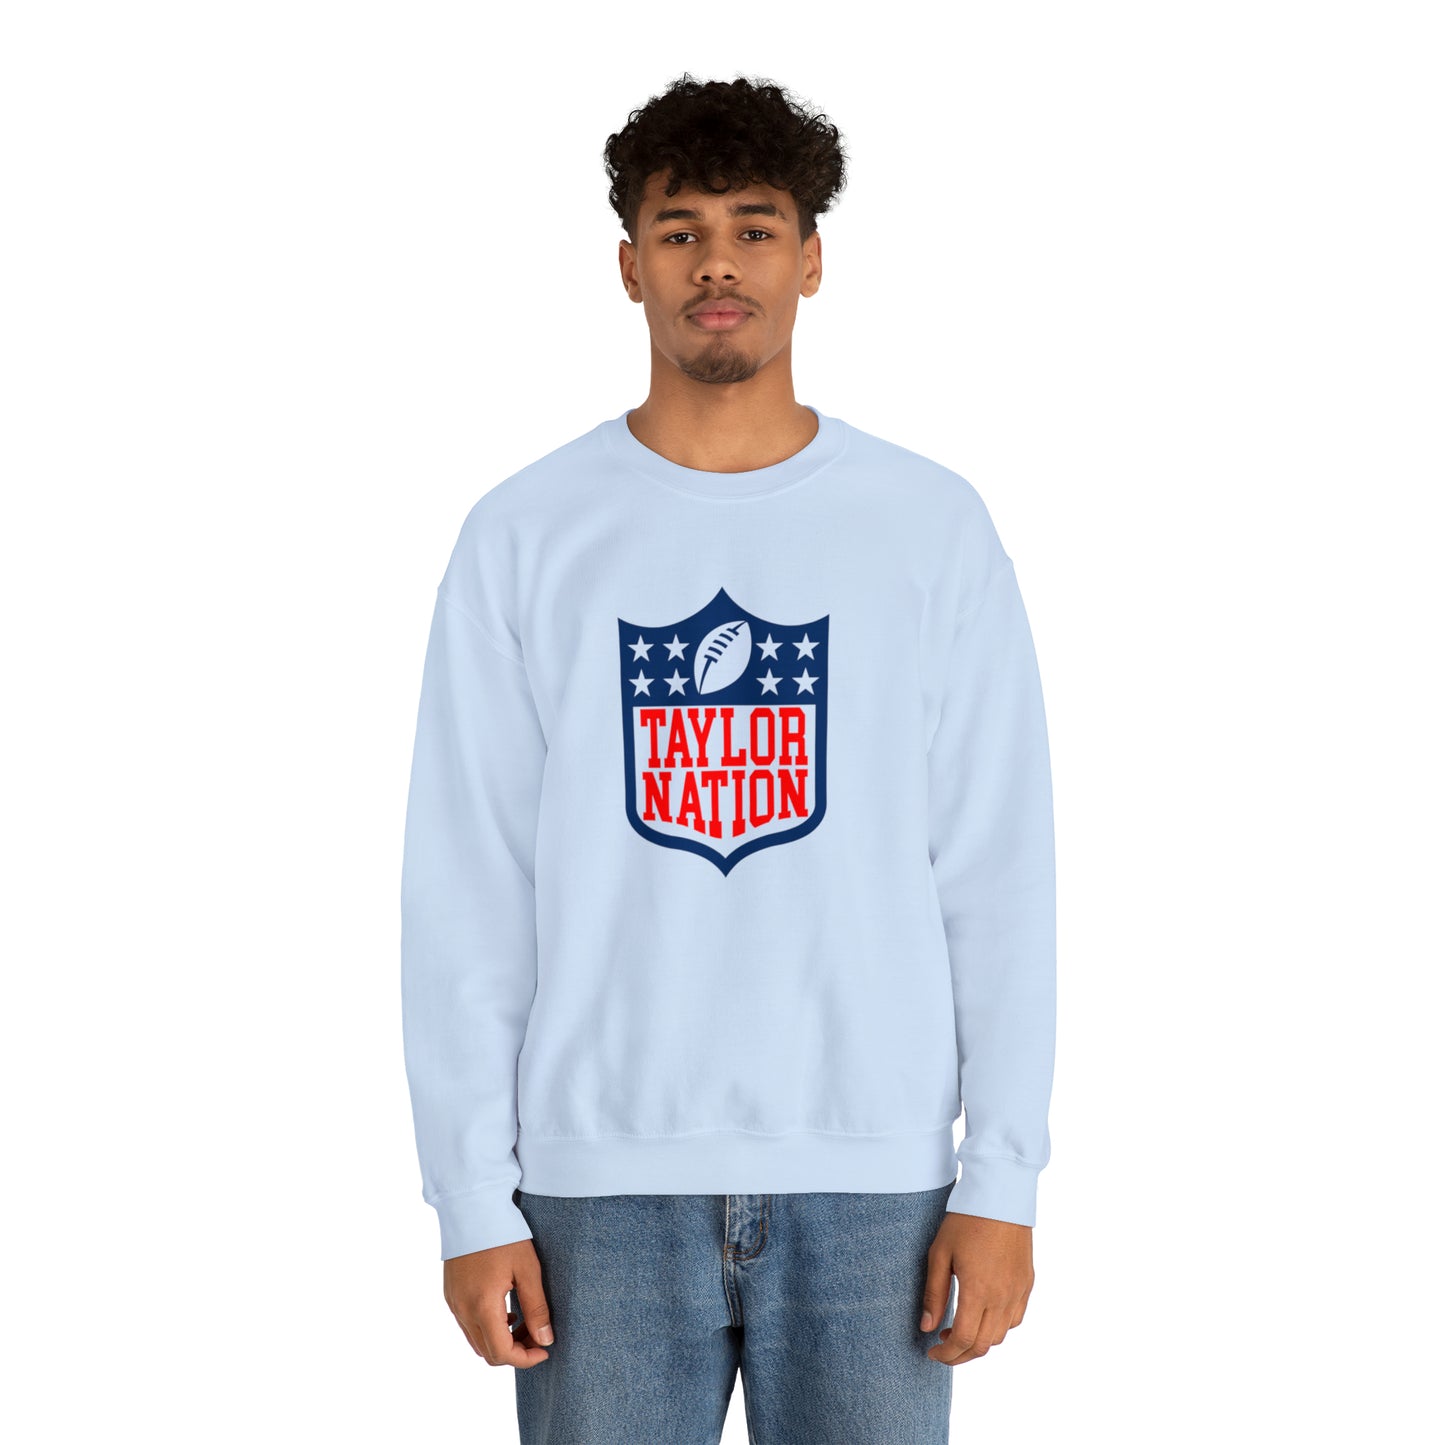 Taylors Nation Unisex Heavy Blend Crewneck Sweatshirt